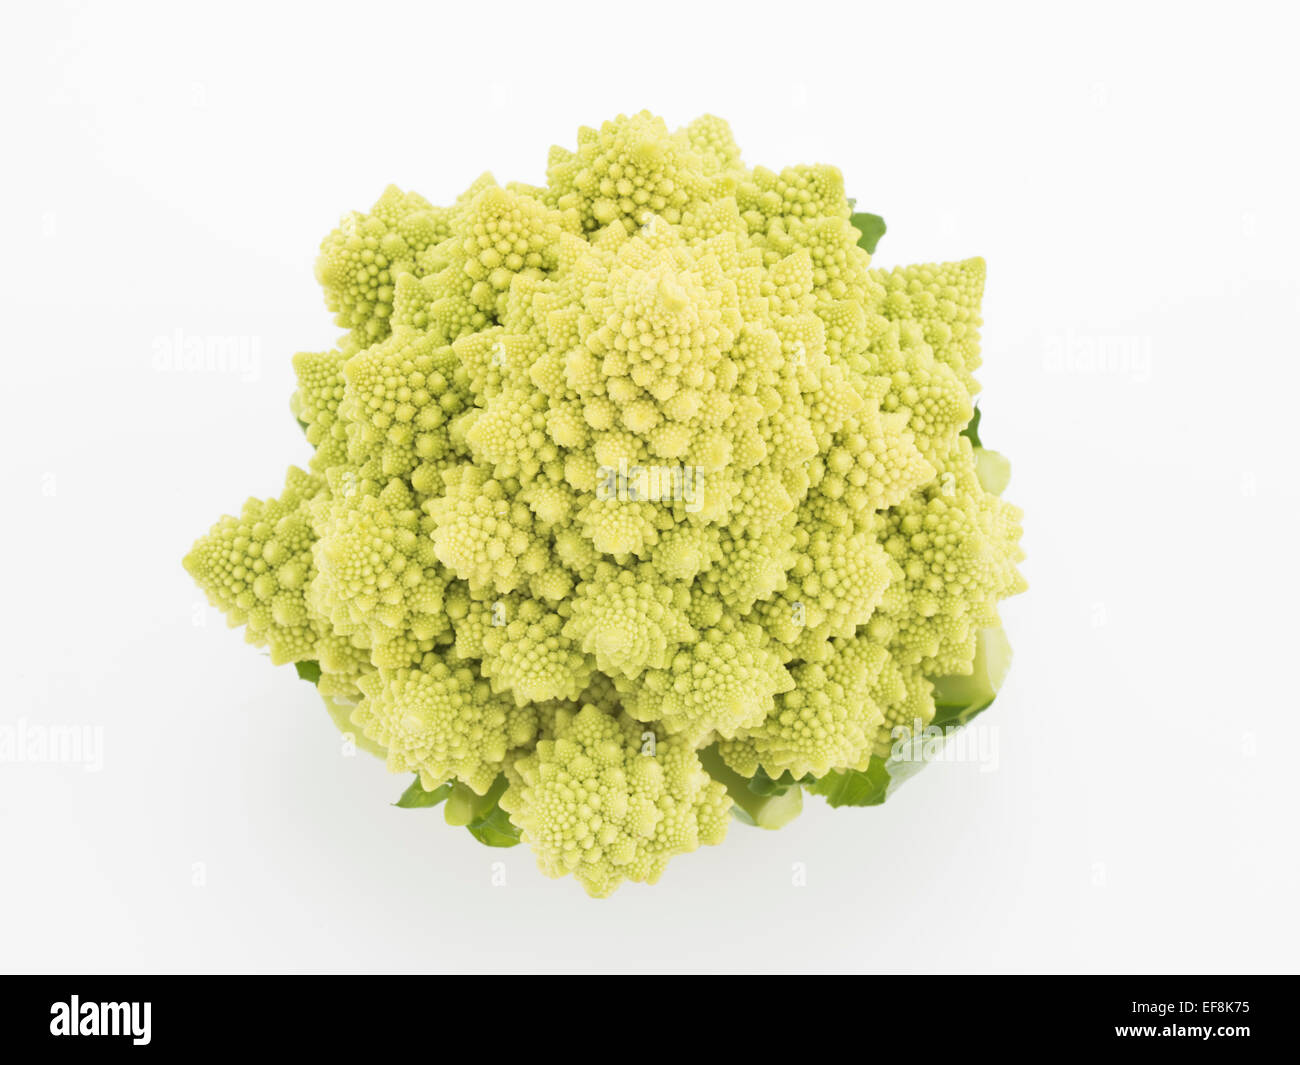 Romanesco aka Romanesque cauliflower or Romanesco broccoli - edible flower bud of Brassica oleracea. Stock Photo